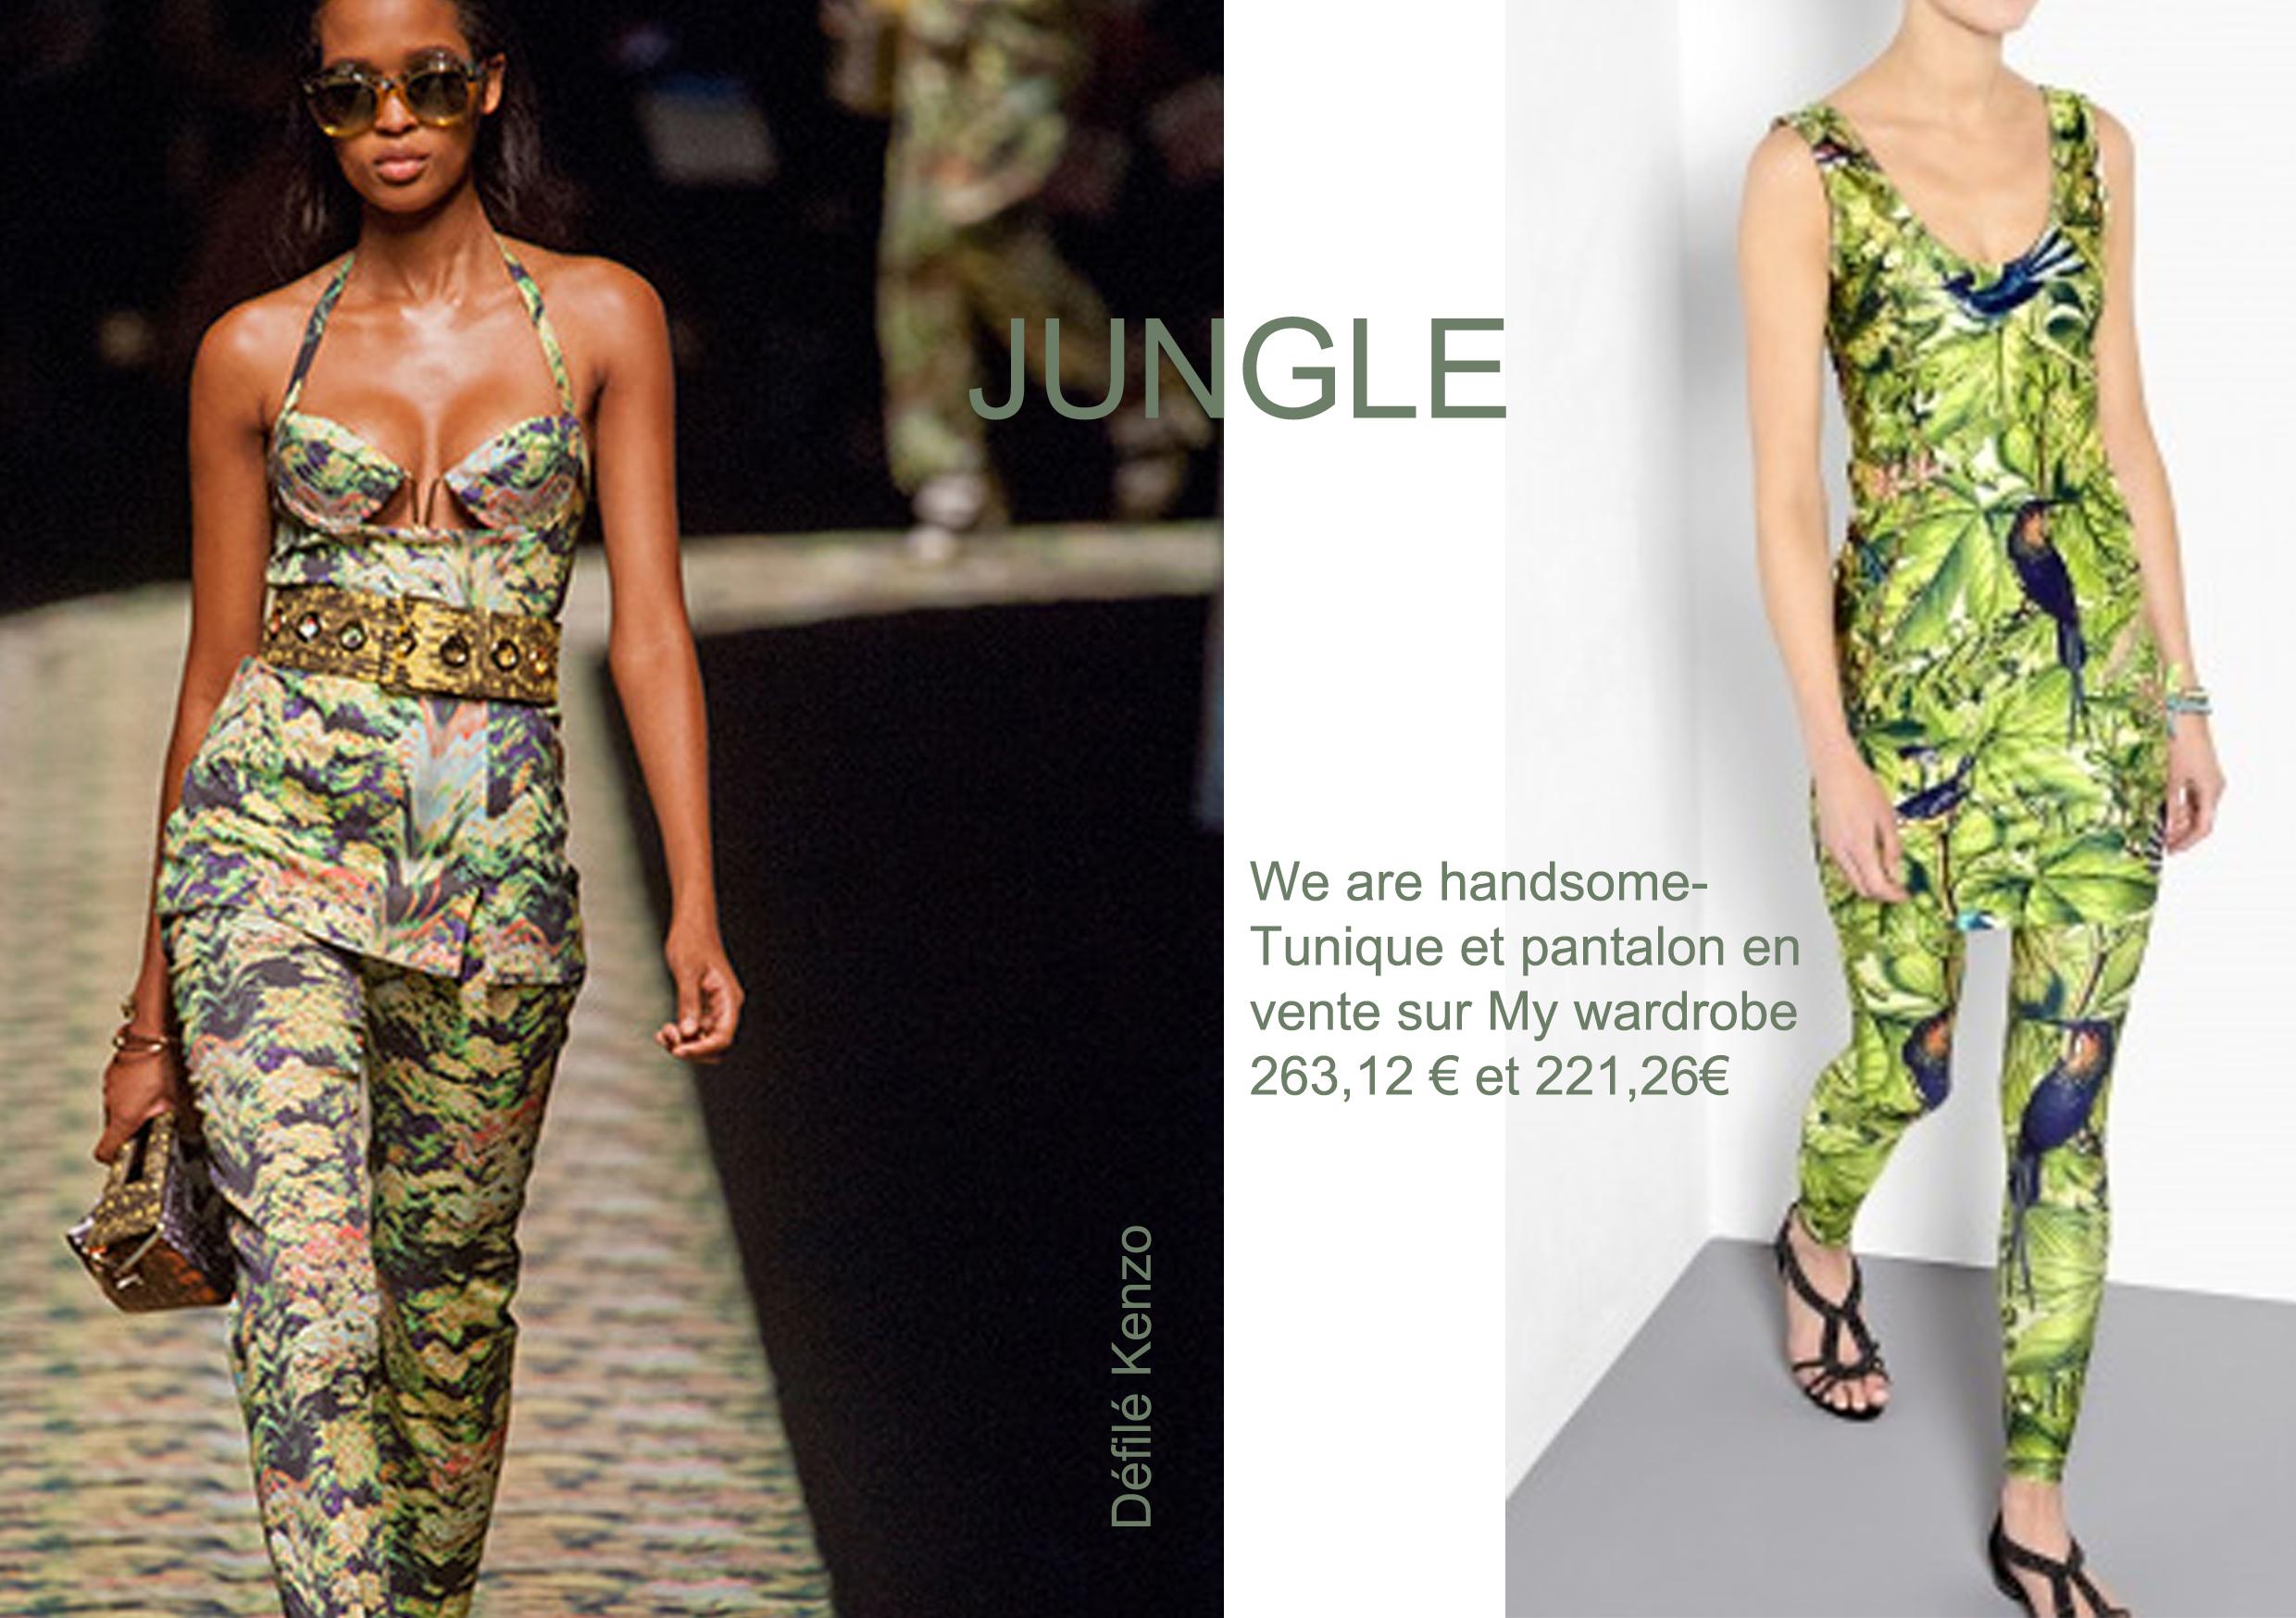 Sélection shopping mars 2013, tendance printemps, Jungle, mode femme, inspiration Kenzo